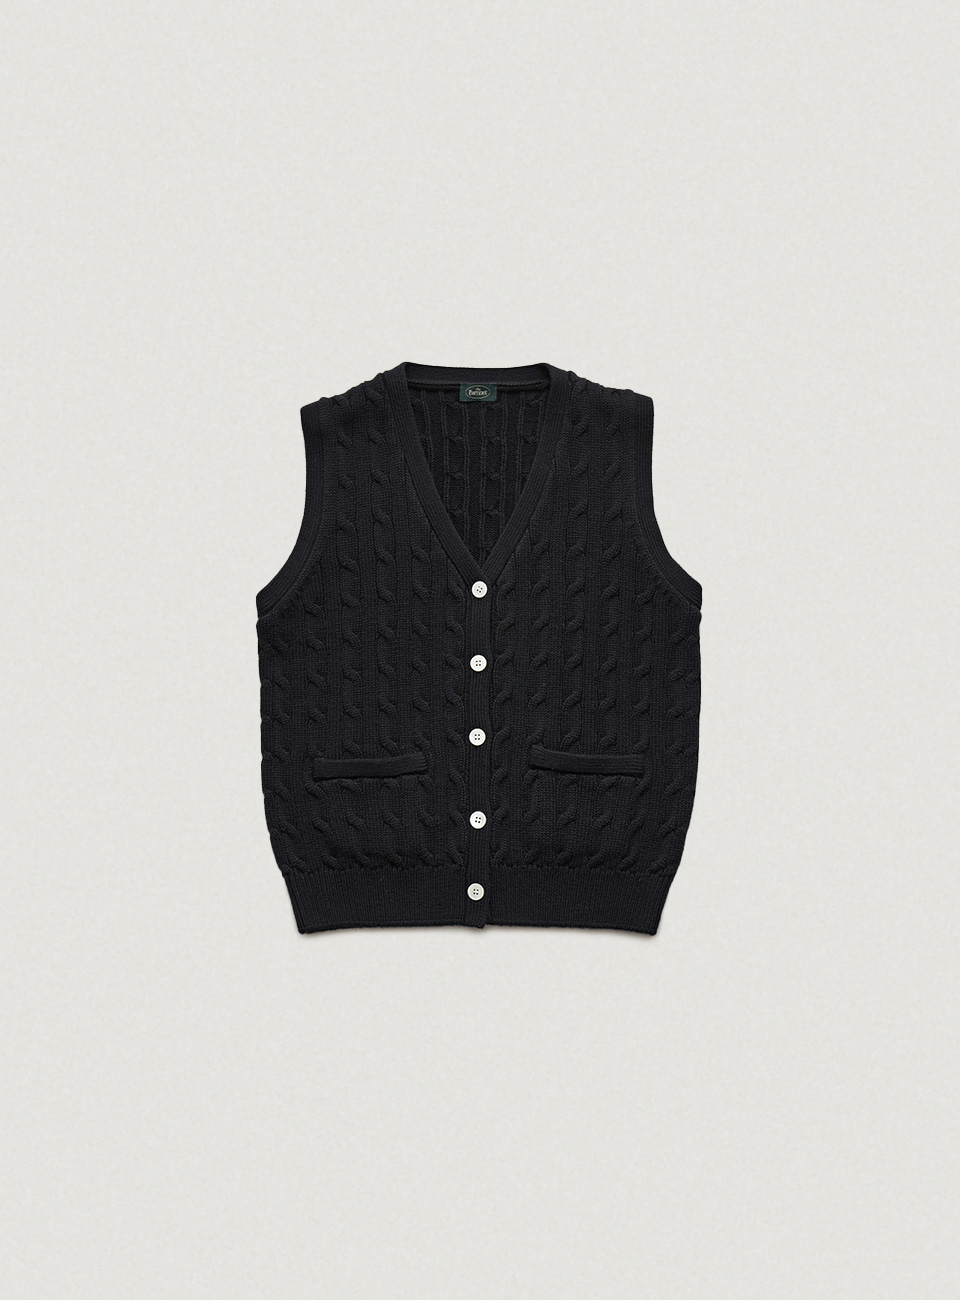 Black Anne Cable Knit Cardigan Vest [6월 초 순차 배송]